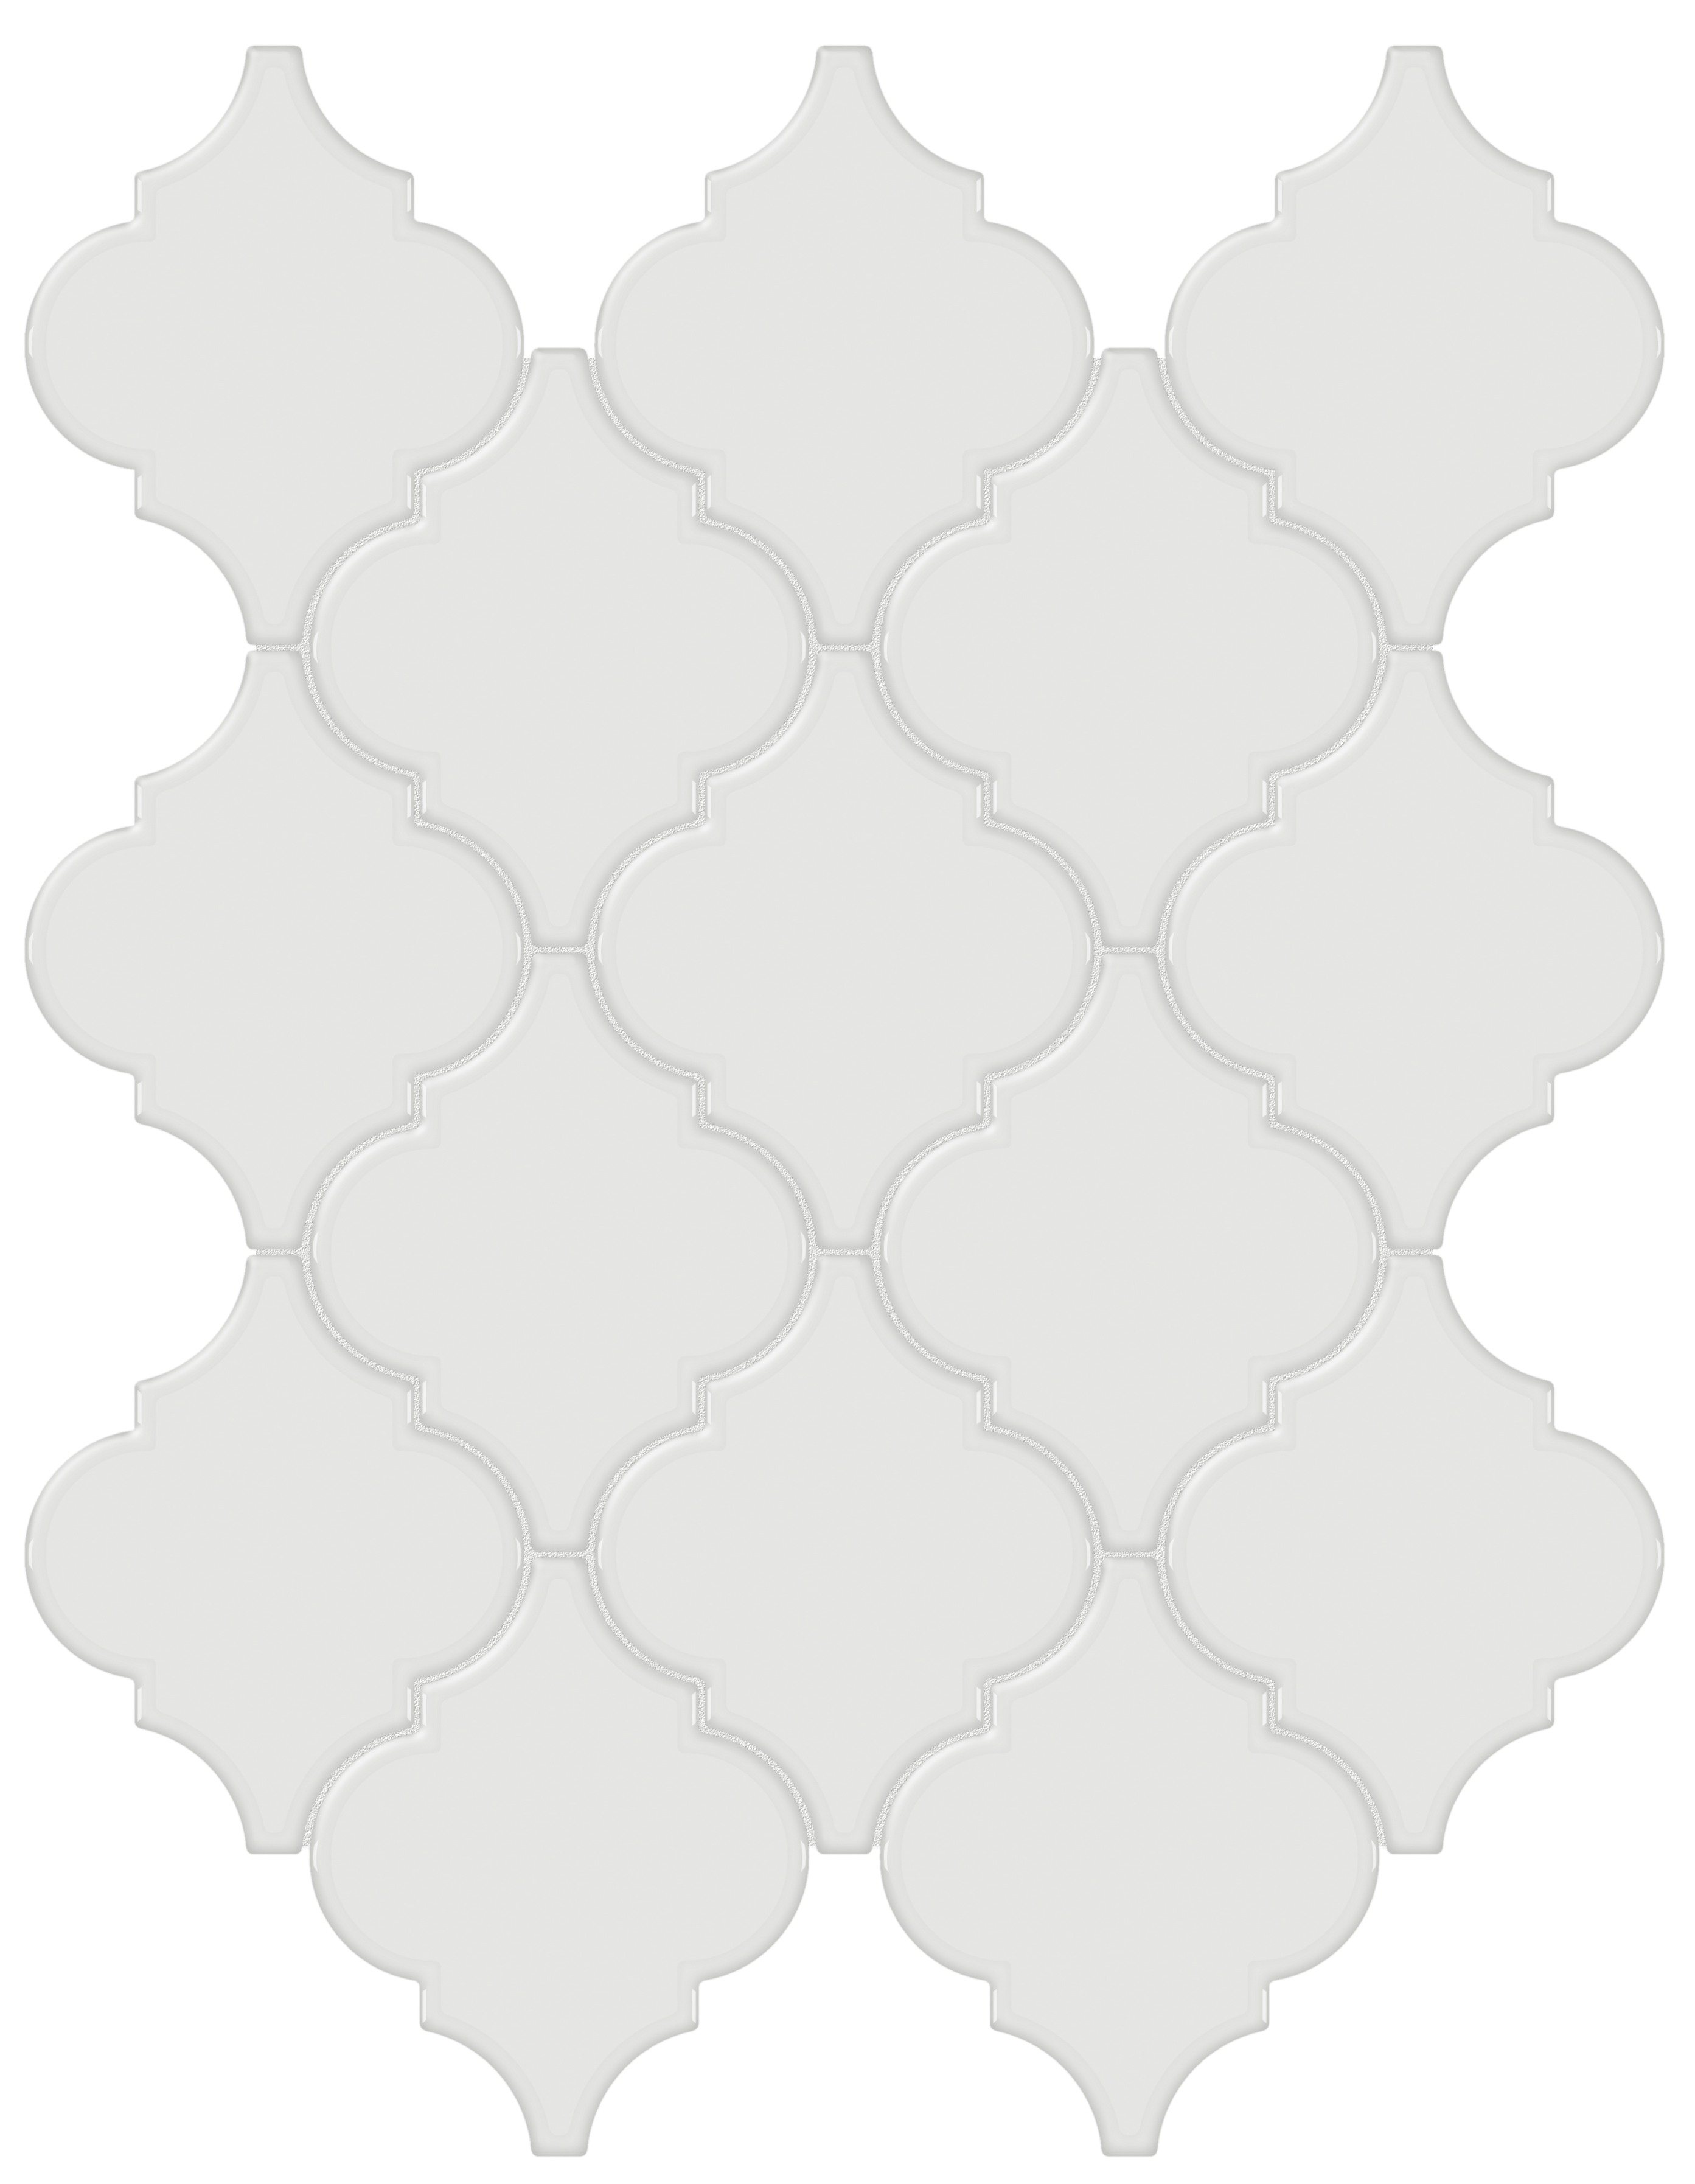 vintage grey arabesque pattern glazed porcelain mosaic from soho anatolia collection distributed by surface group international glossy finish pressed edge mesh shape